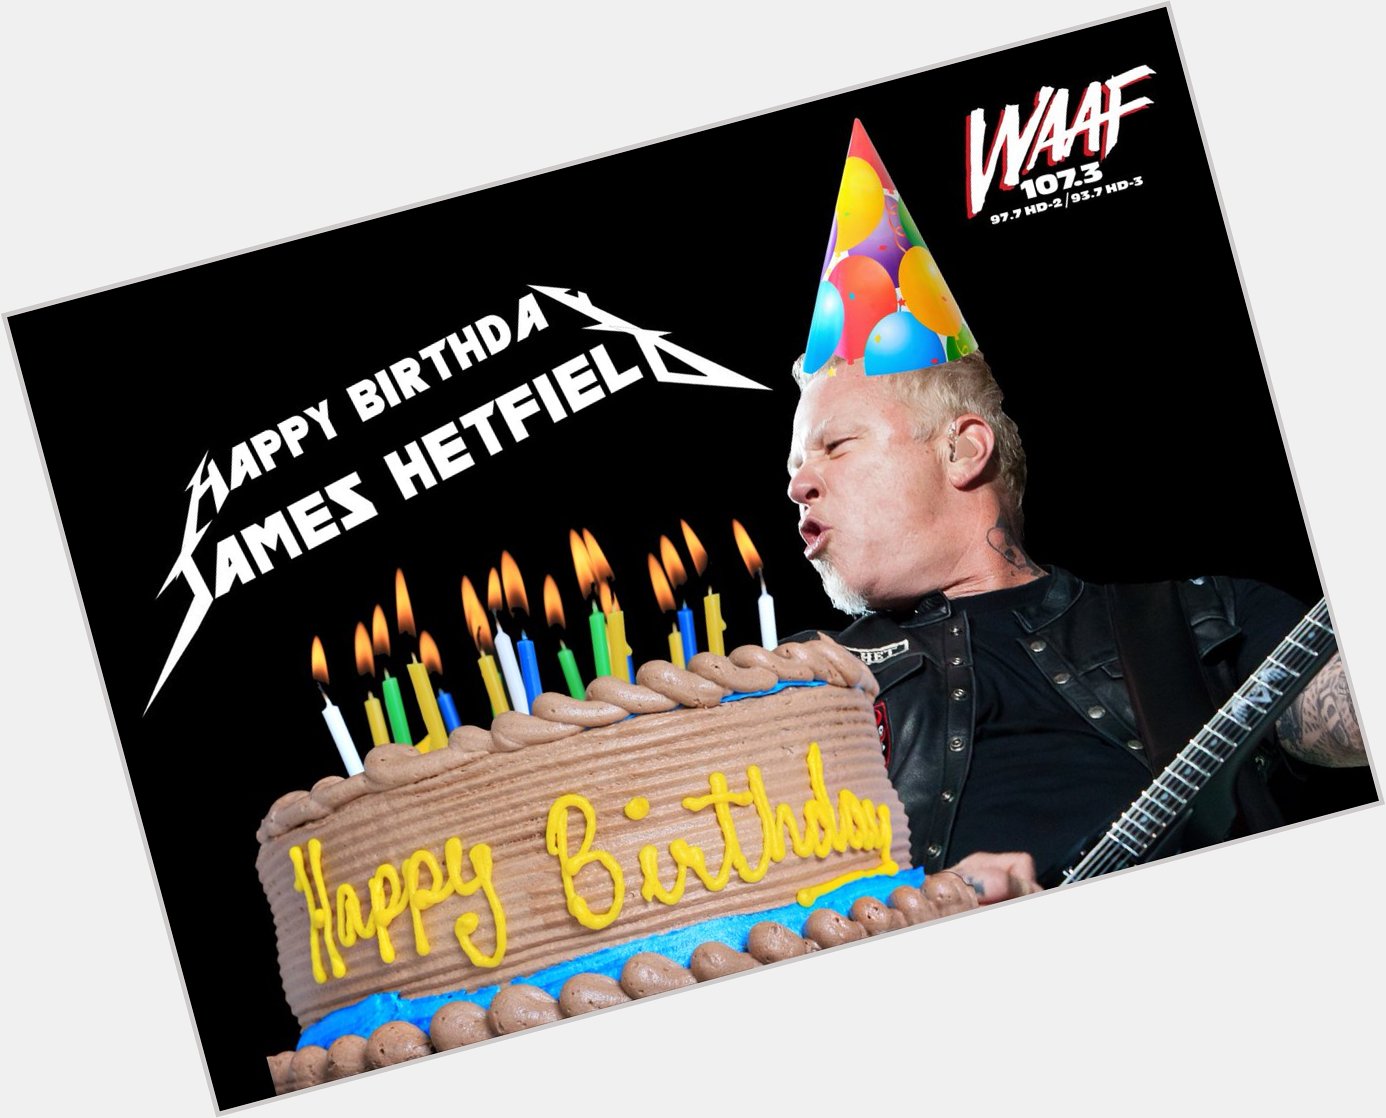 Happy 54th Birthday to James Hetfield of  